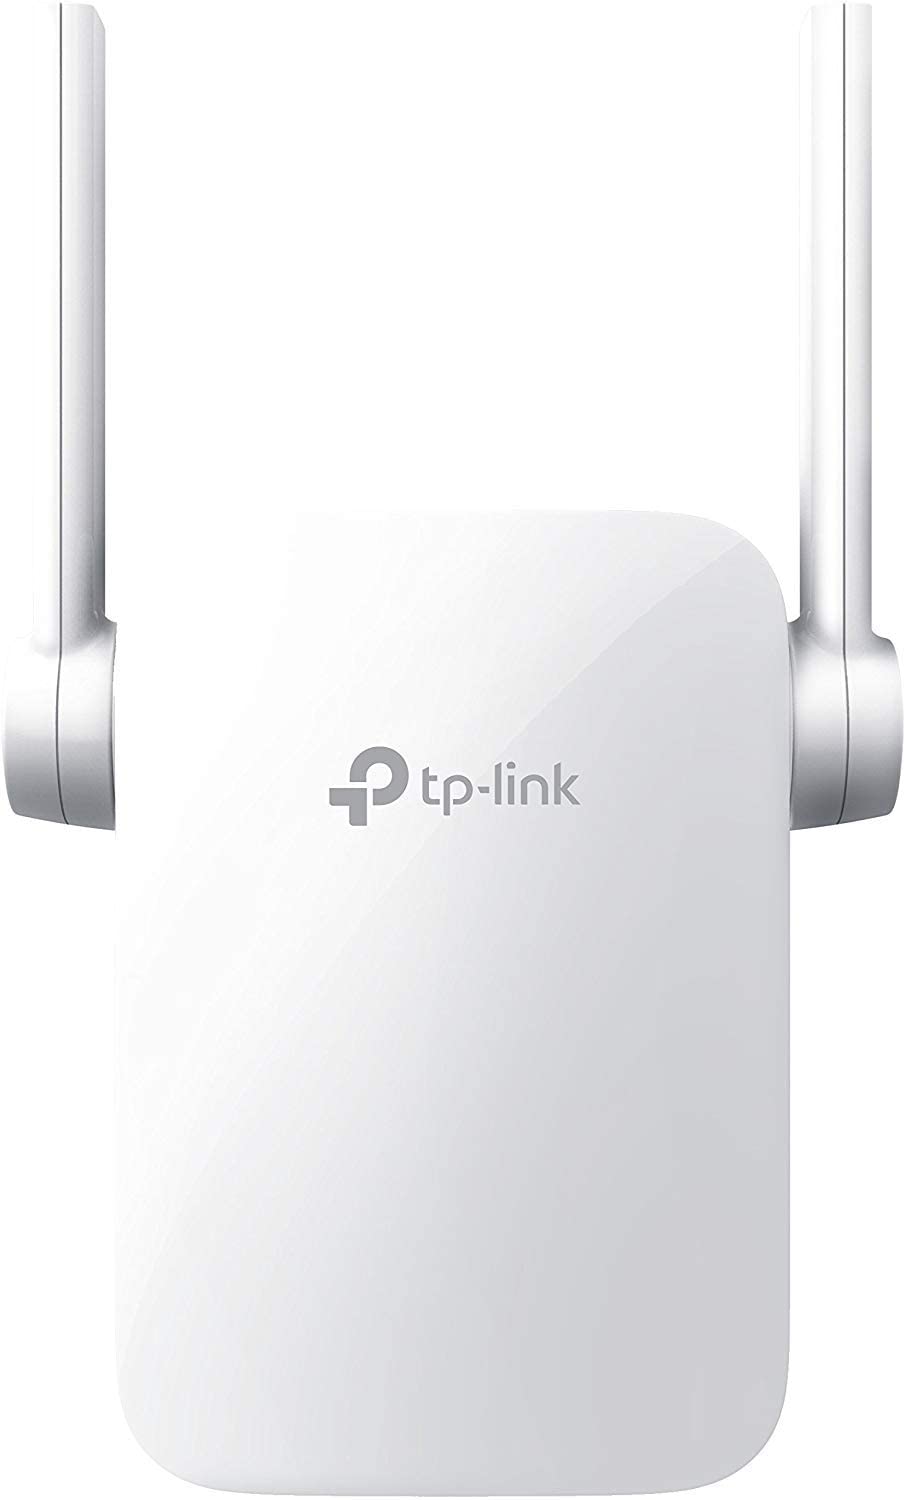 TP-Link RE205 AC750 750Mbps Wi-Fi Dual Band Range Extender - Certified Refurbished